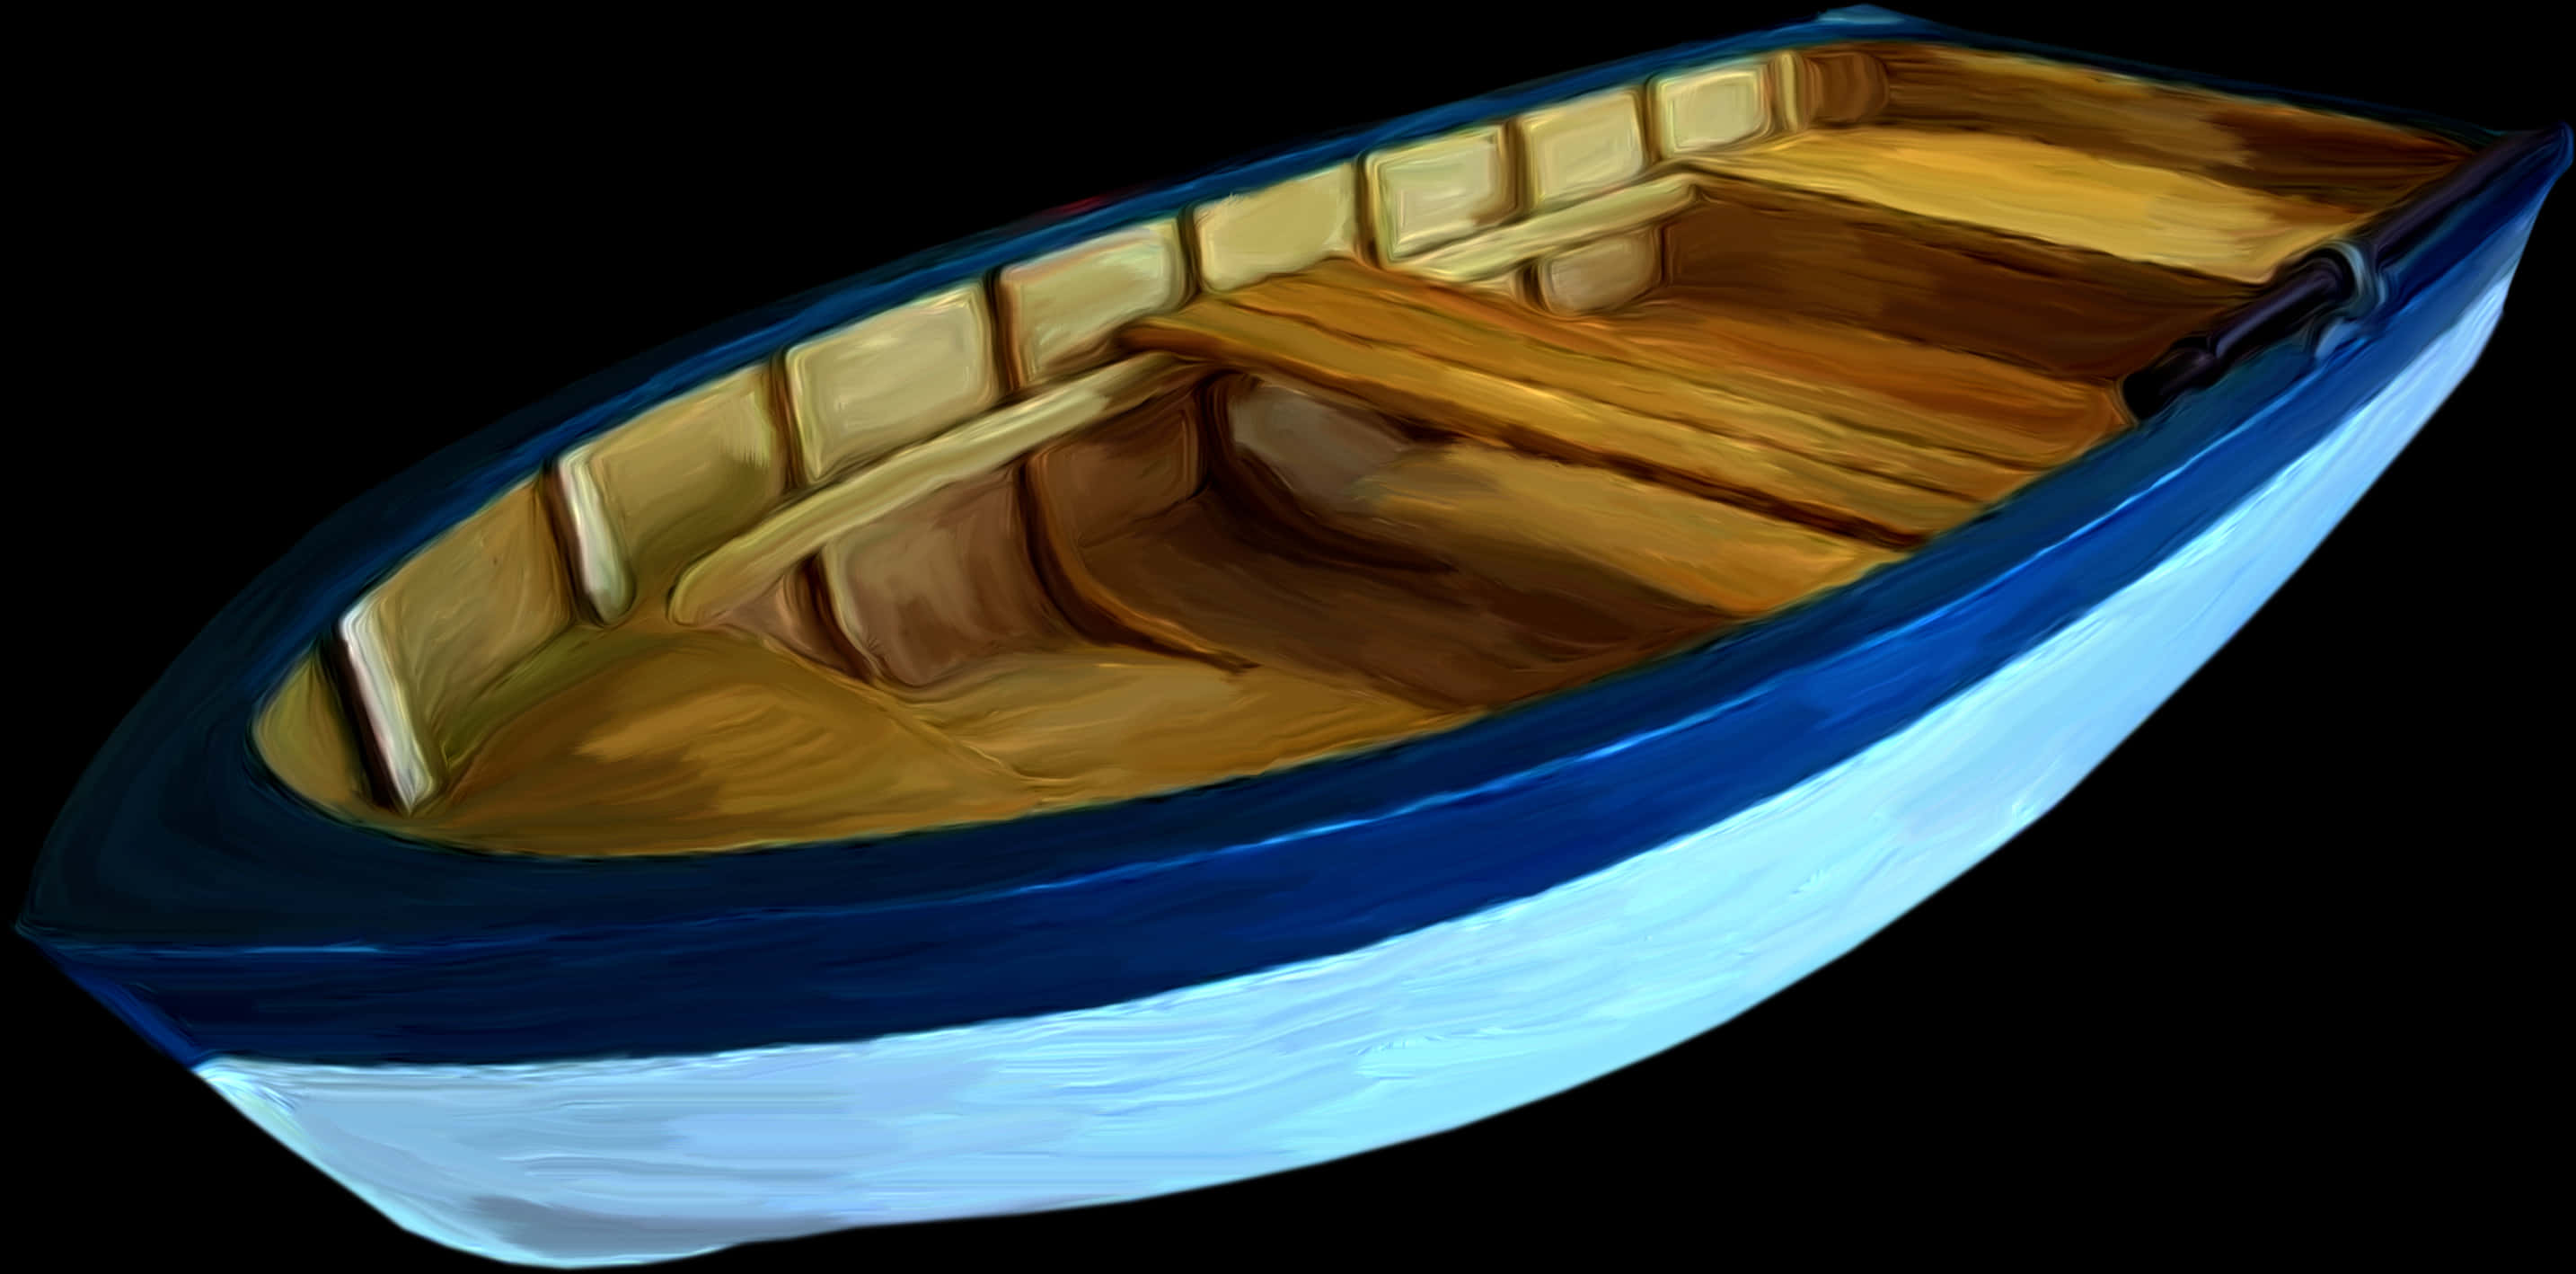 Painted Rowboat Artwork PNG image